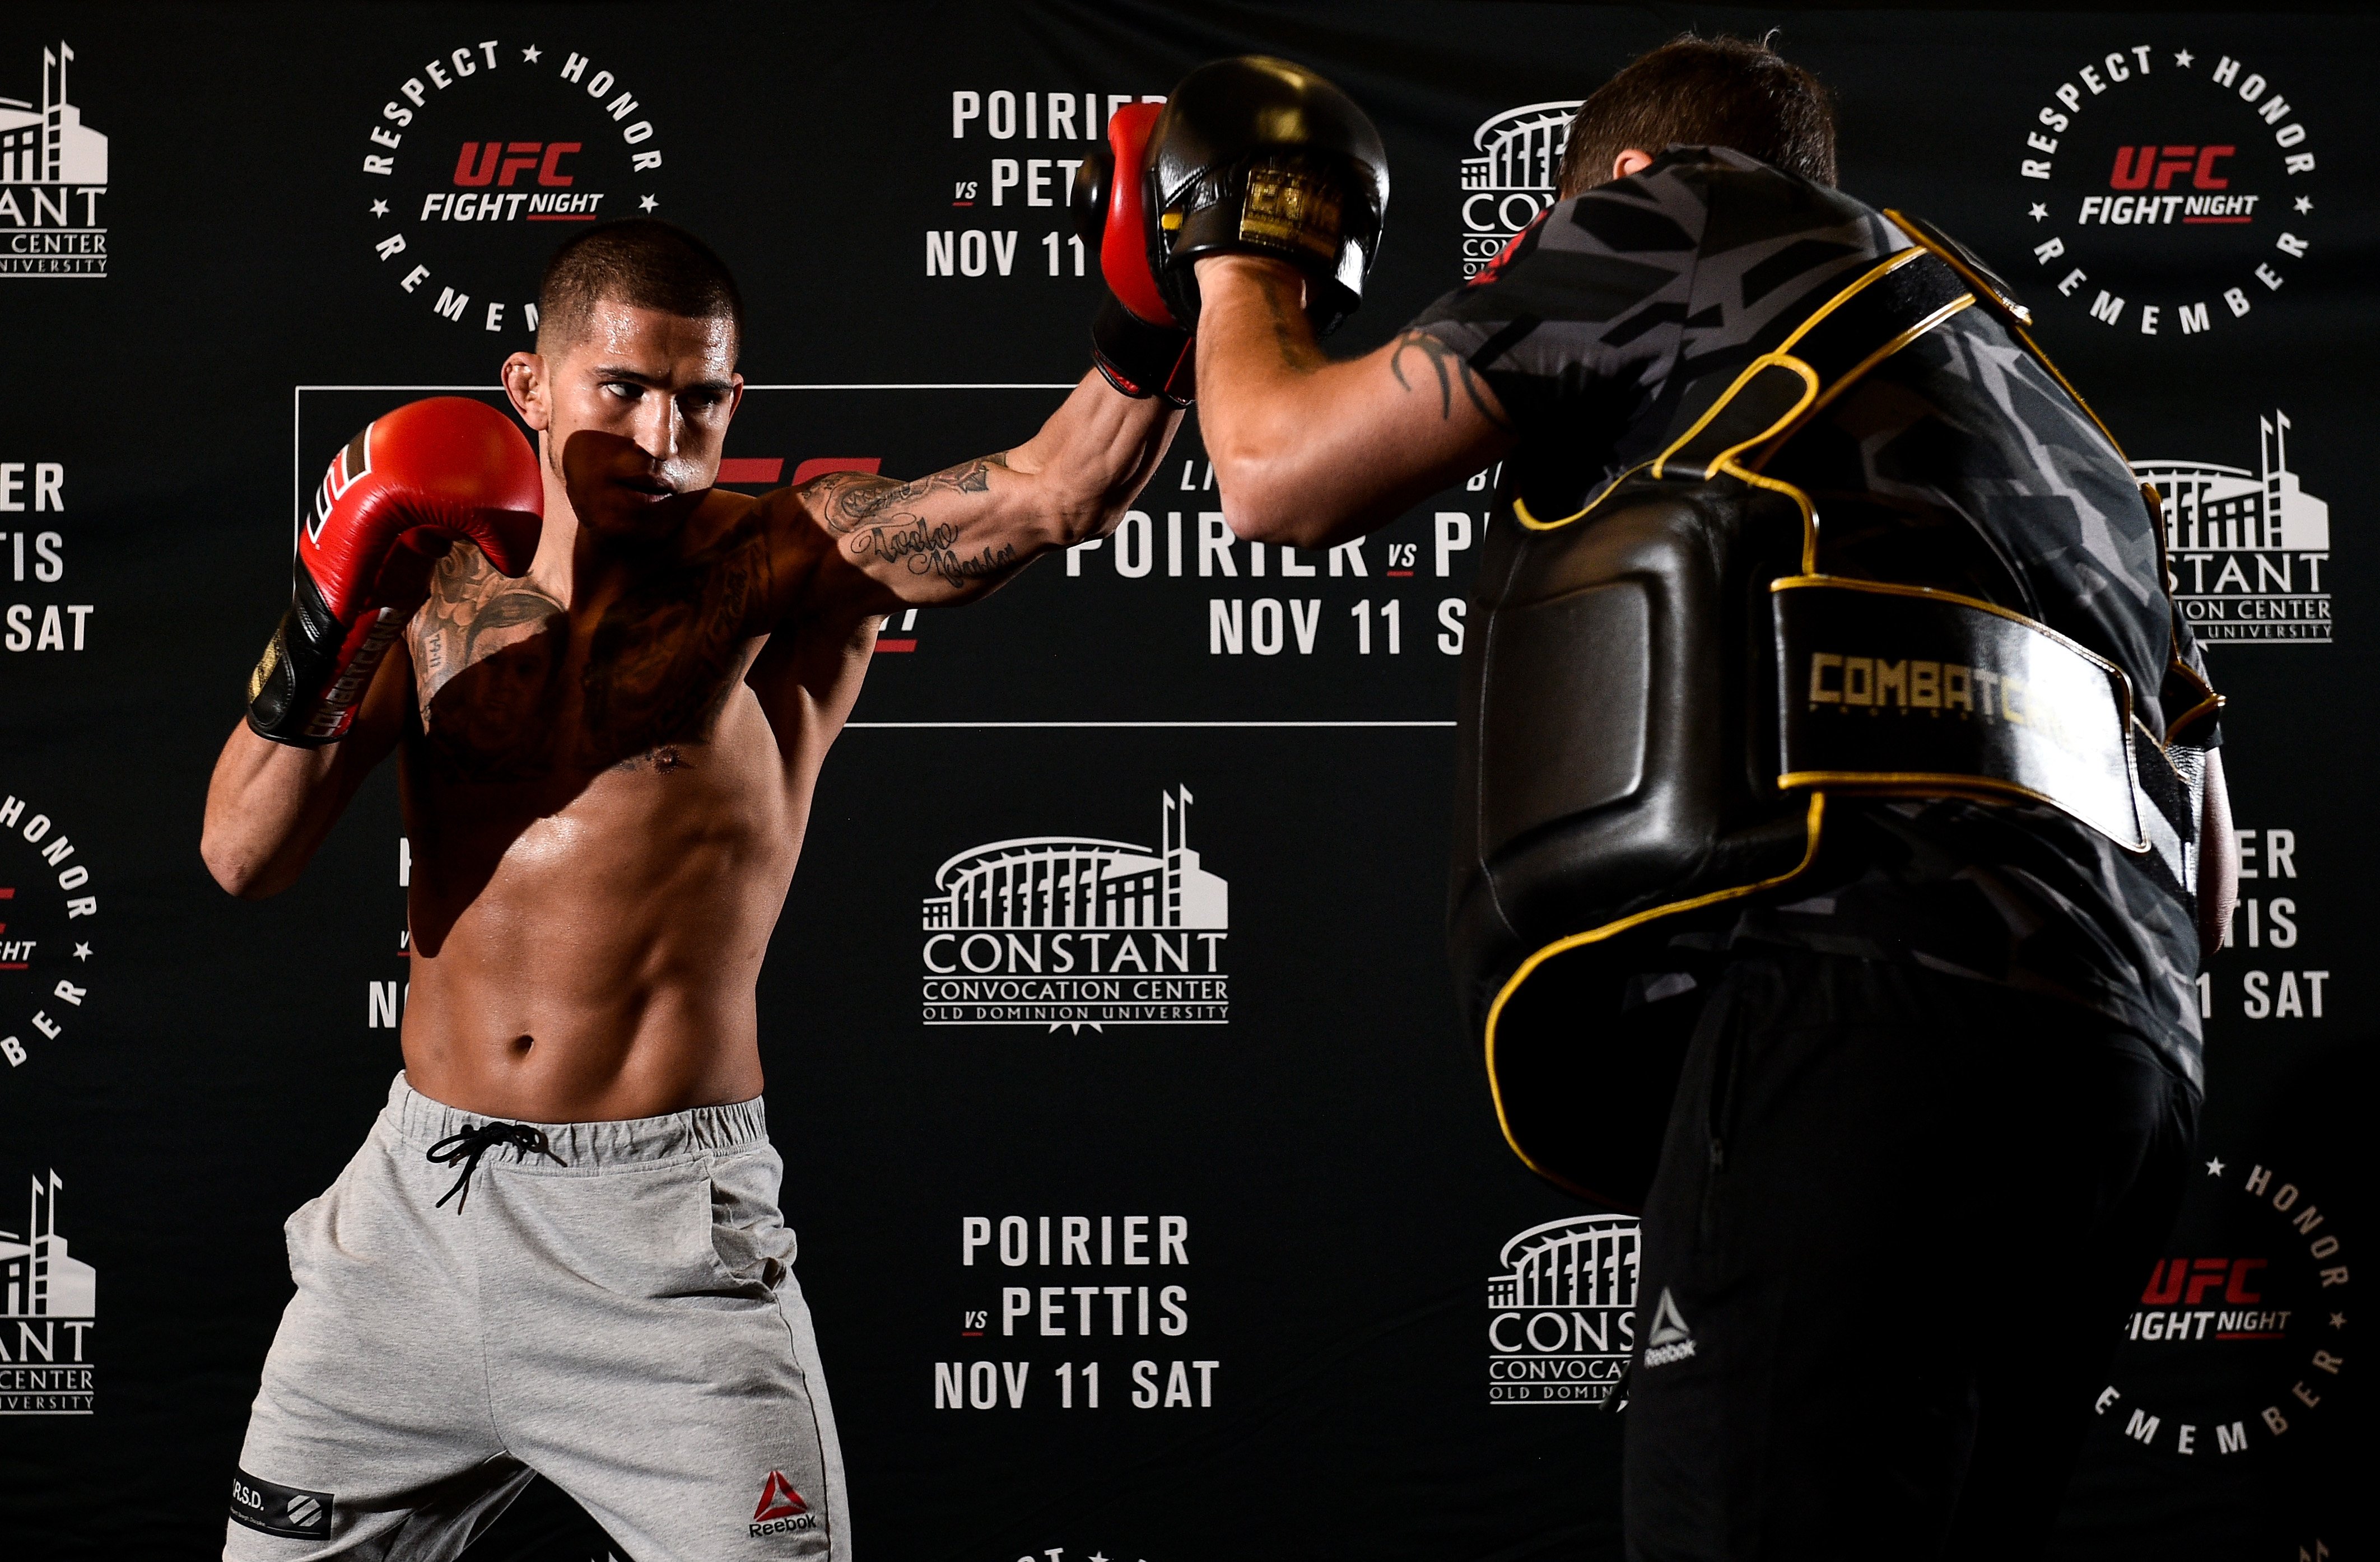 UFC Fight Night 120 Results (11/10): Anthony Pettis vs Dustin Poirier, Matt Brown vs. Diego Sanchez, More